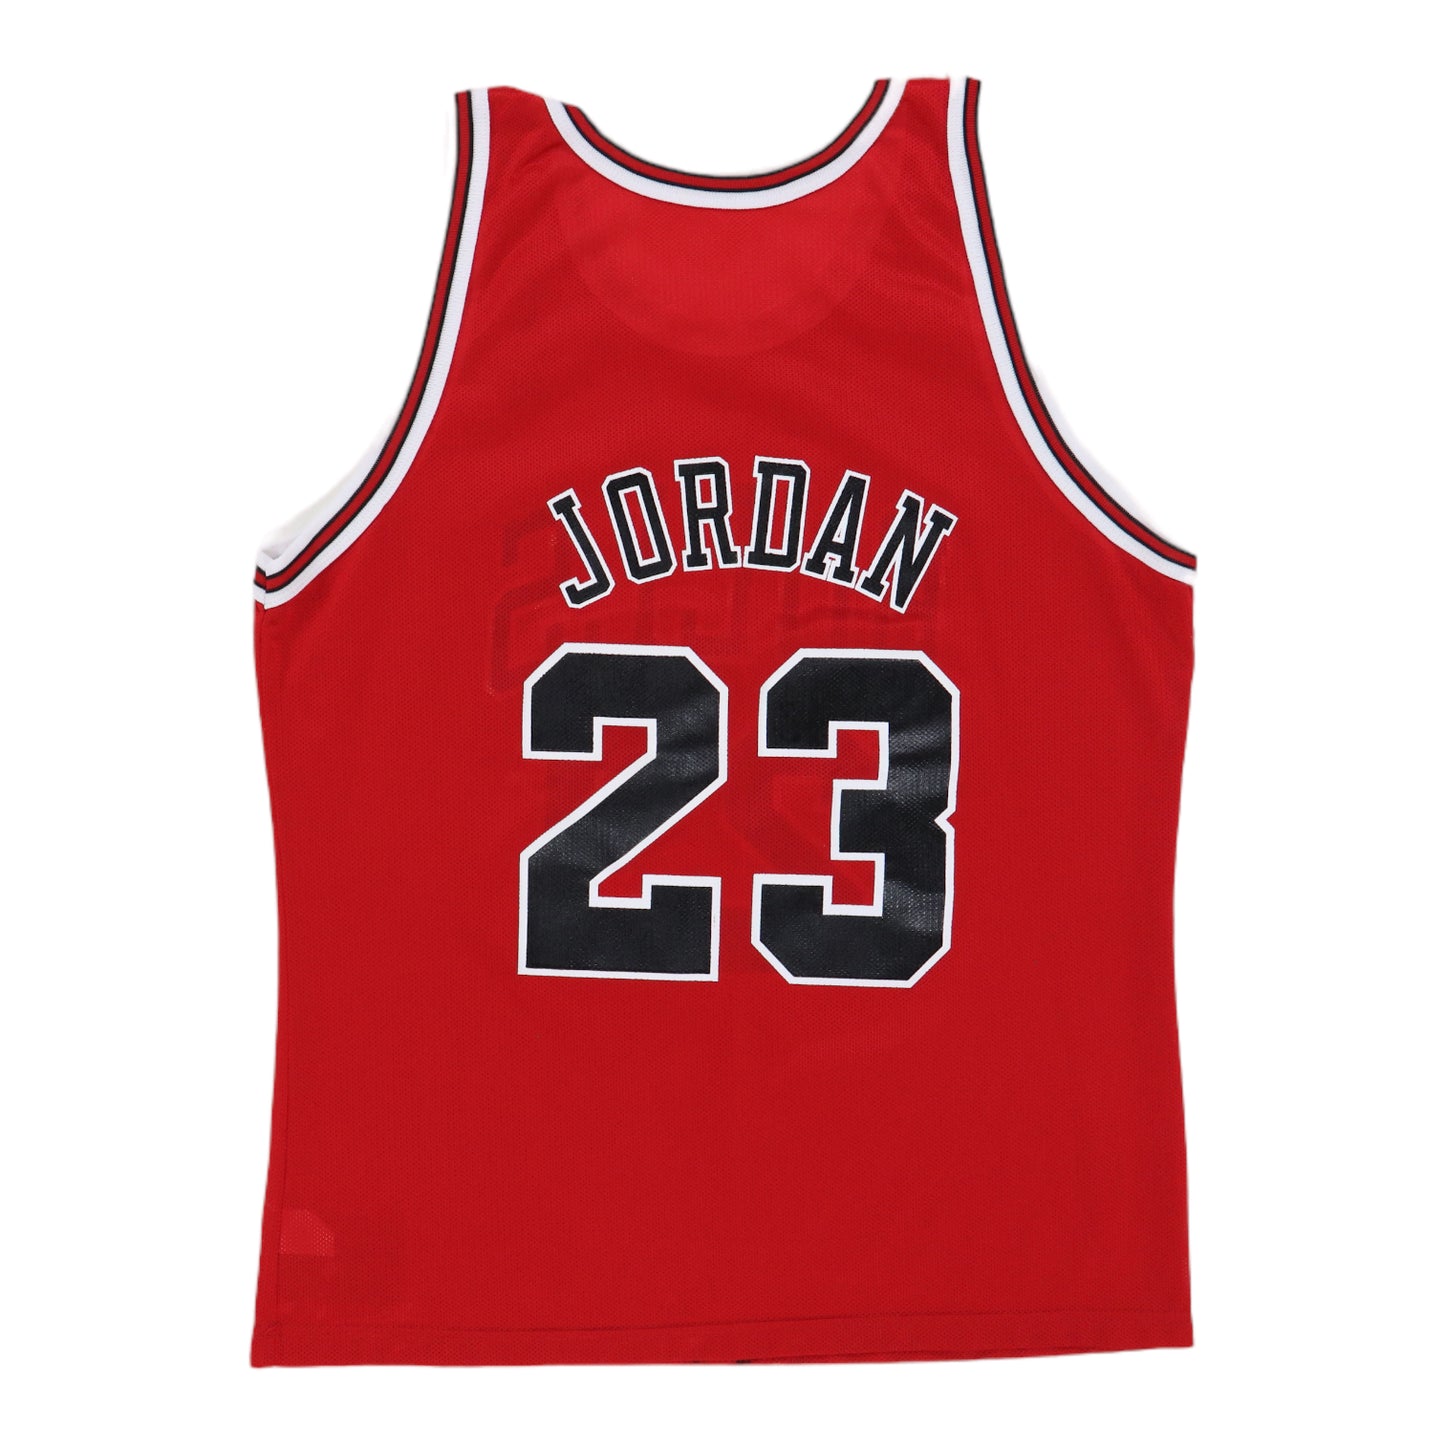 1990s Michael Jordan Chicago Bulls NBA Basketball Jersey